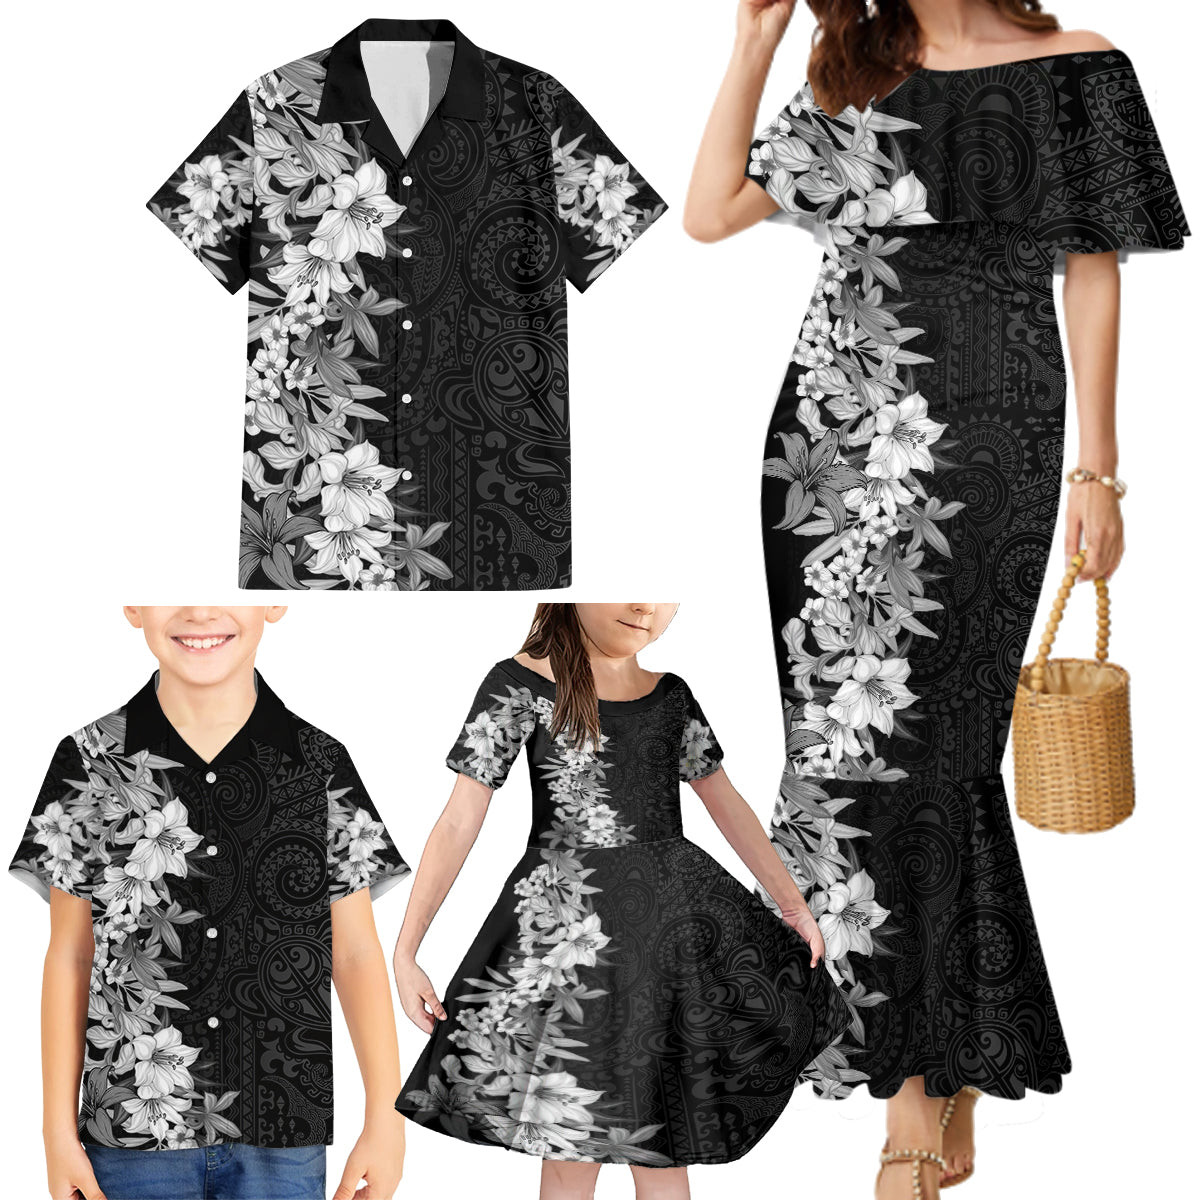 Hawaii Tropical Leaves and Flowers Family Matching Mermaid Dress and Hawaiian Shirt Tribal Polynesian Pattern Black White Style LT03 - Polynesian Pride